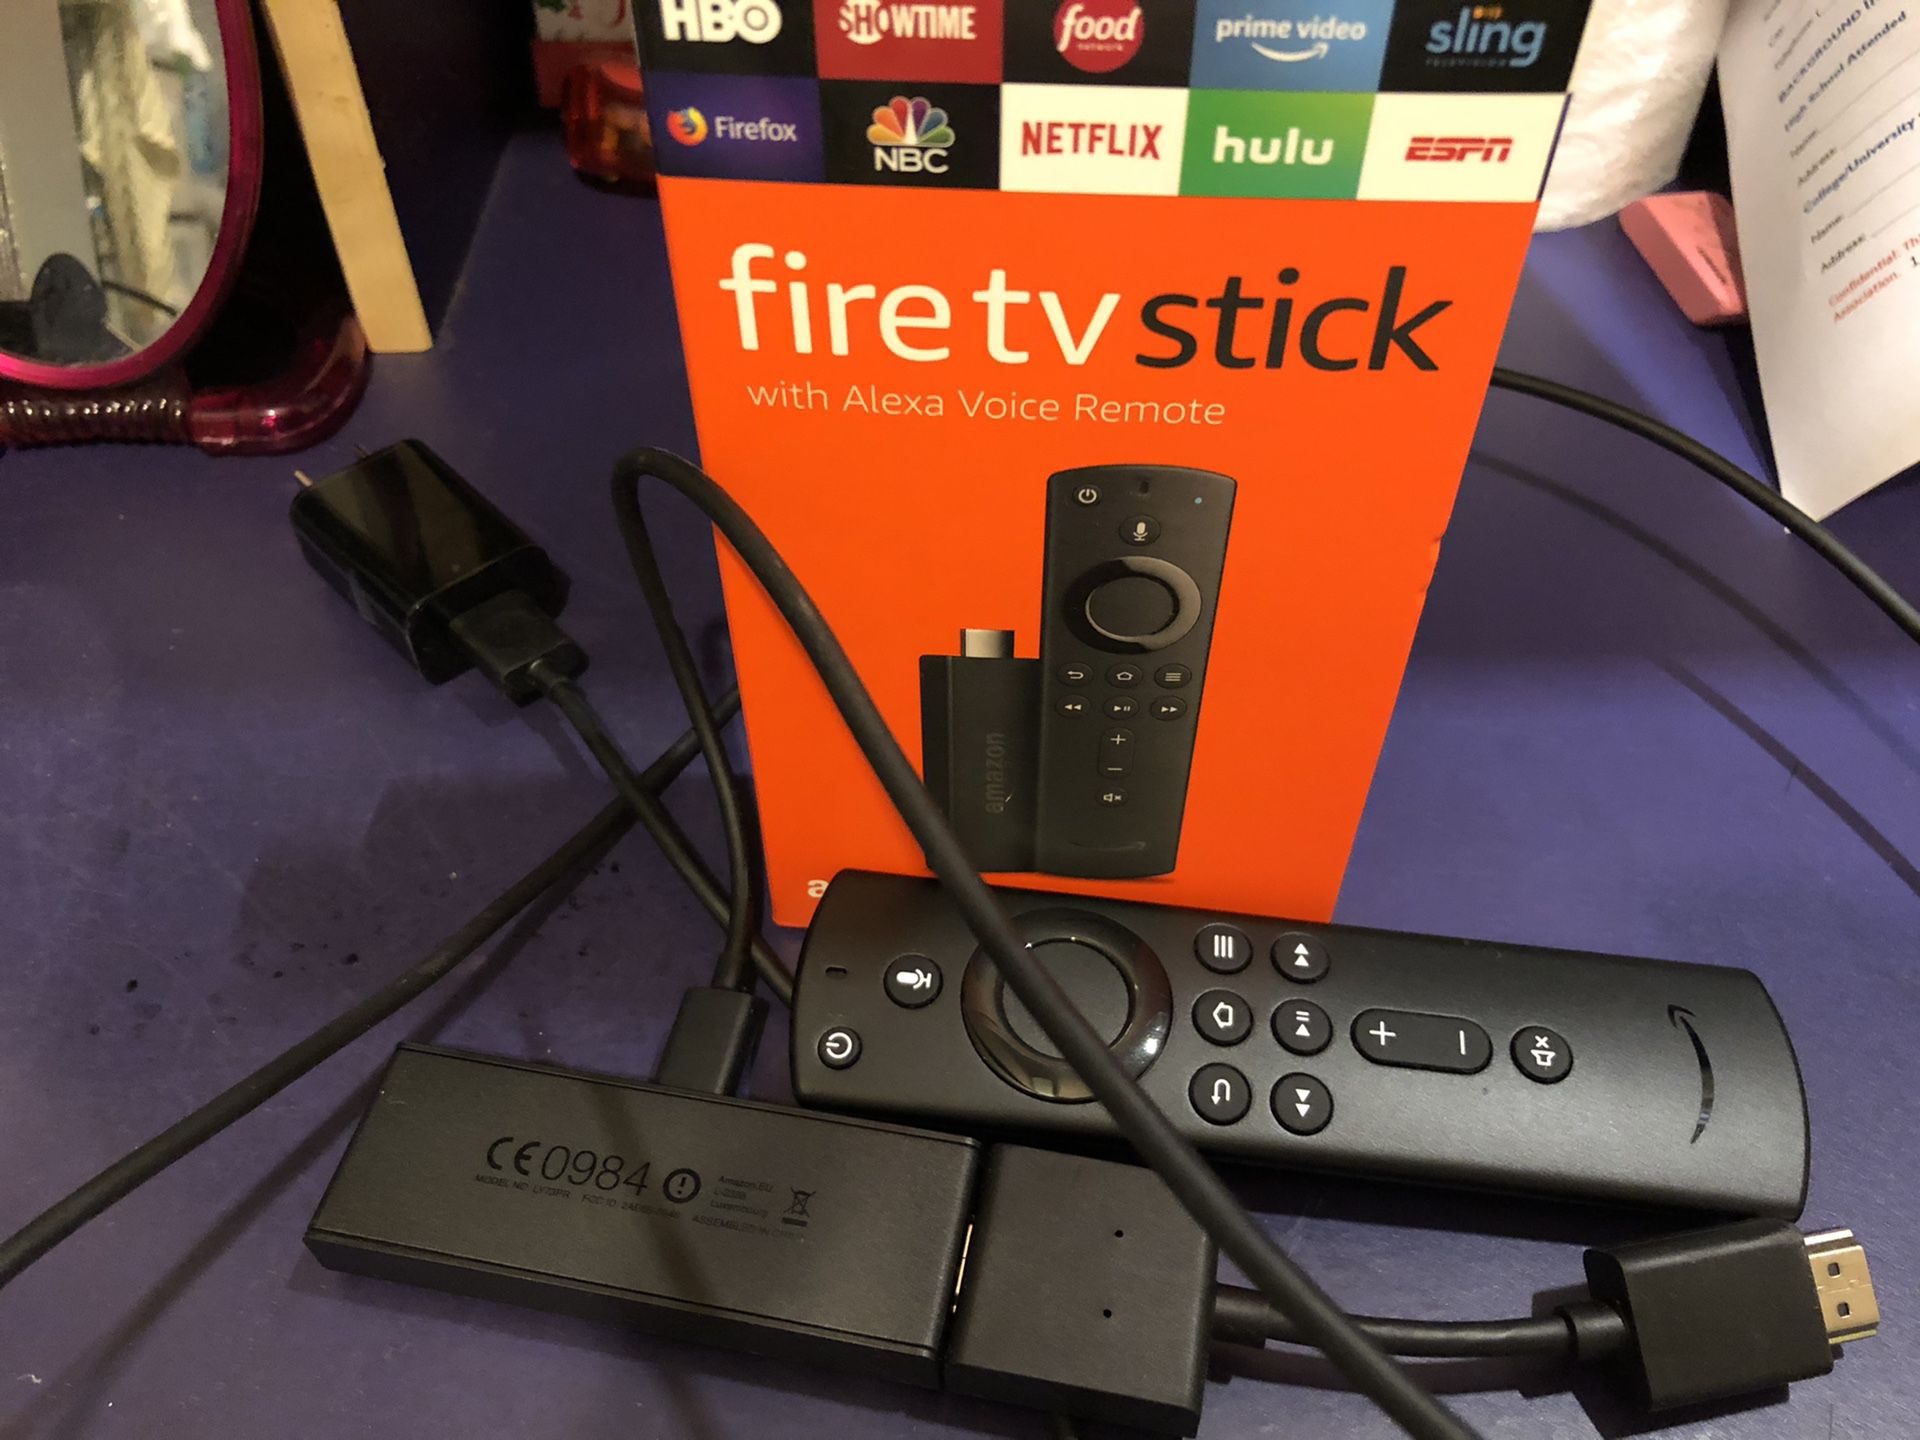 Fire tv Stick with Alexa Voice Remote